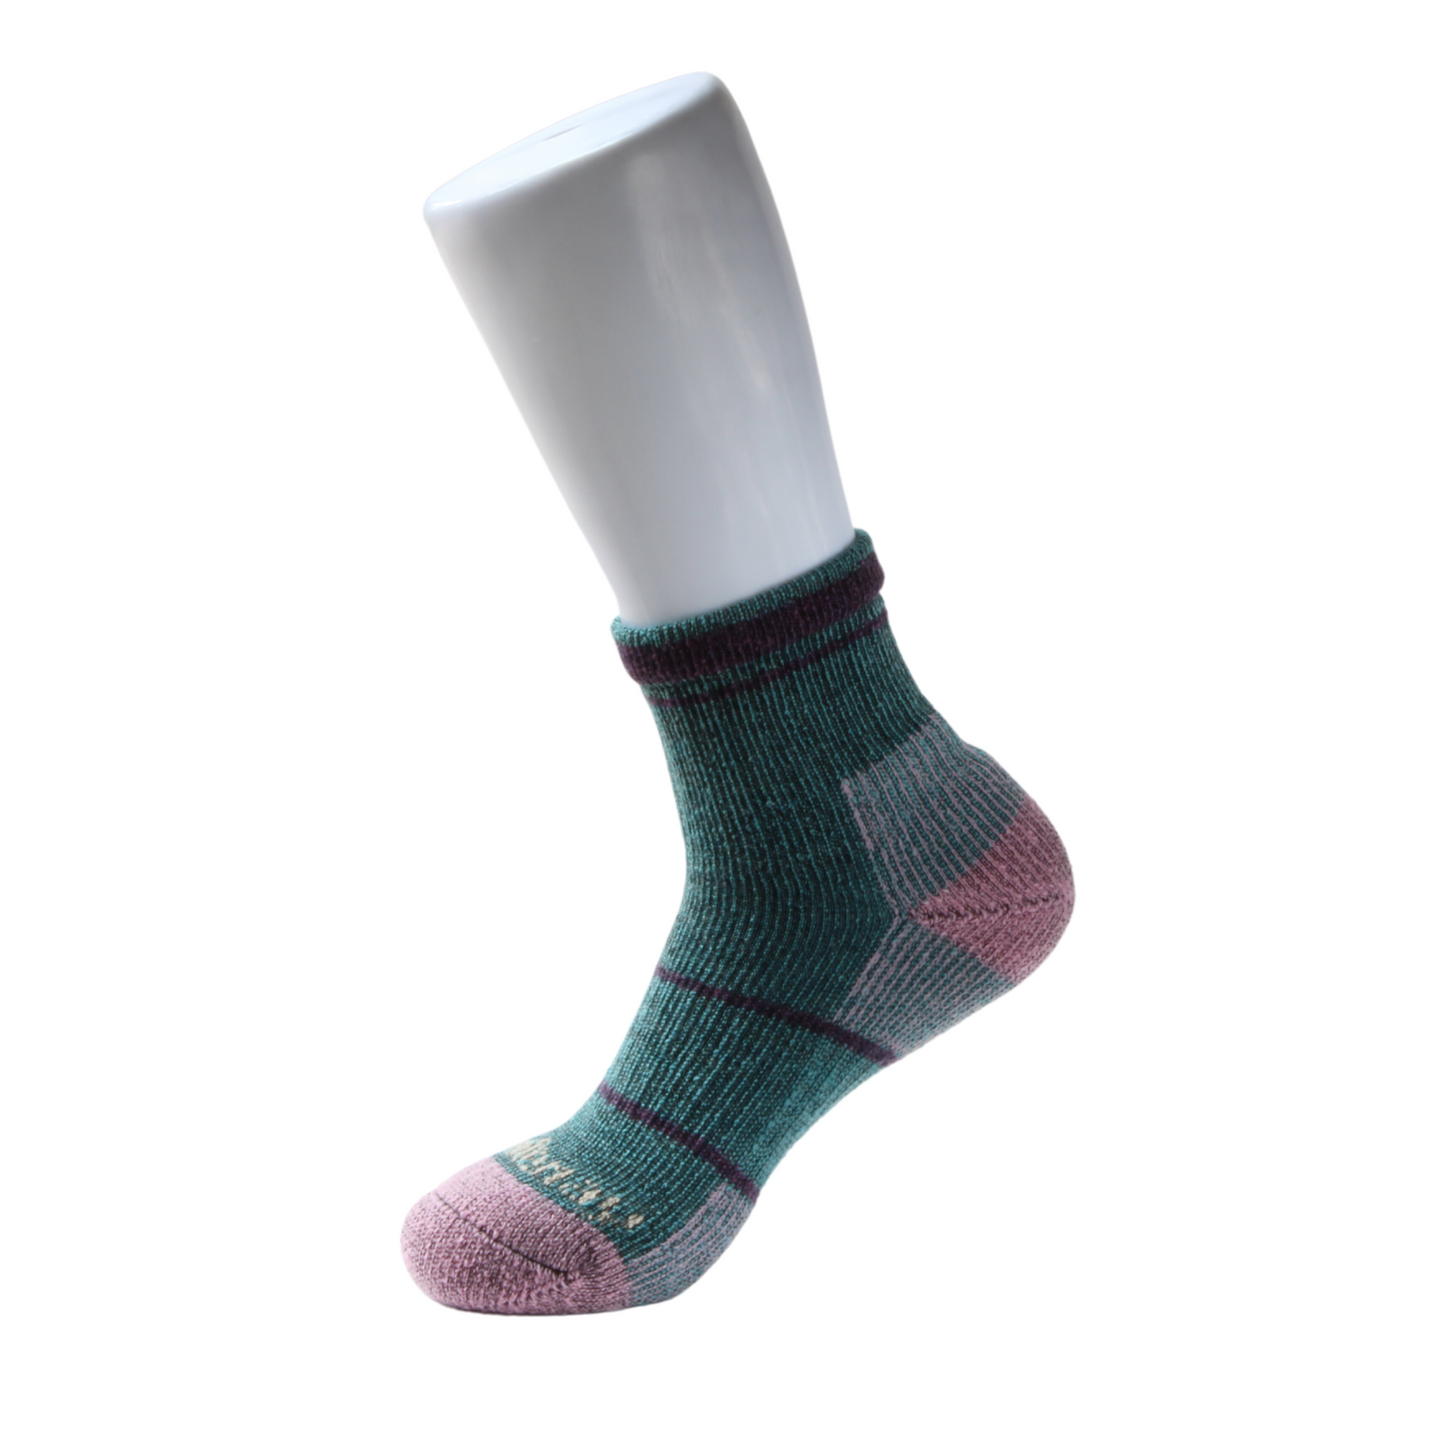 Aqua & Pink MidCrew Midweight Merino Wool Kootenay Socks Adventure